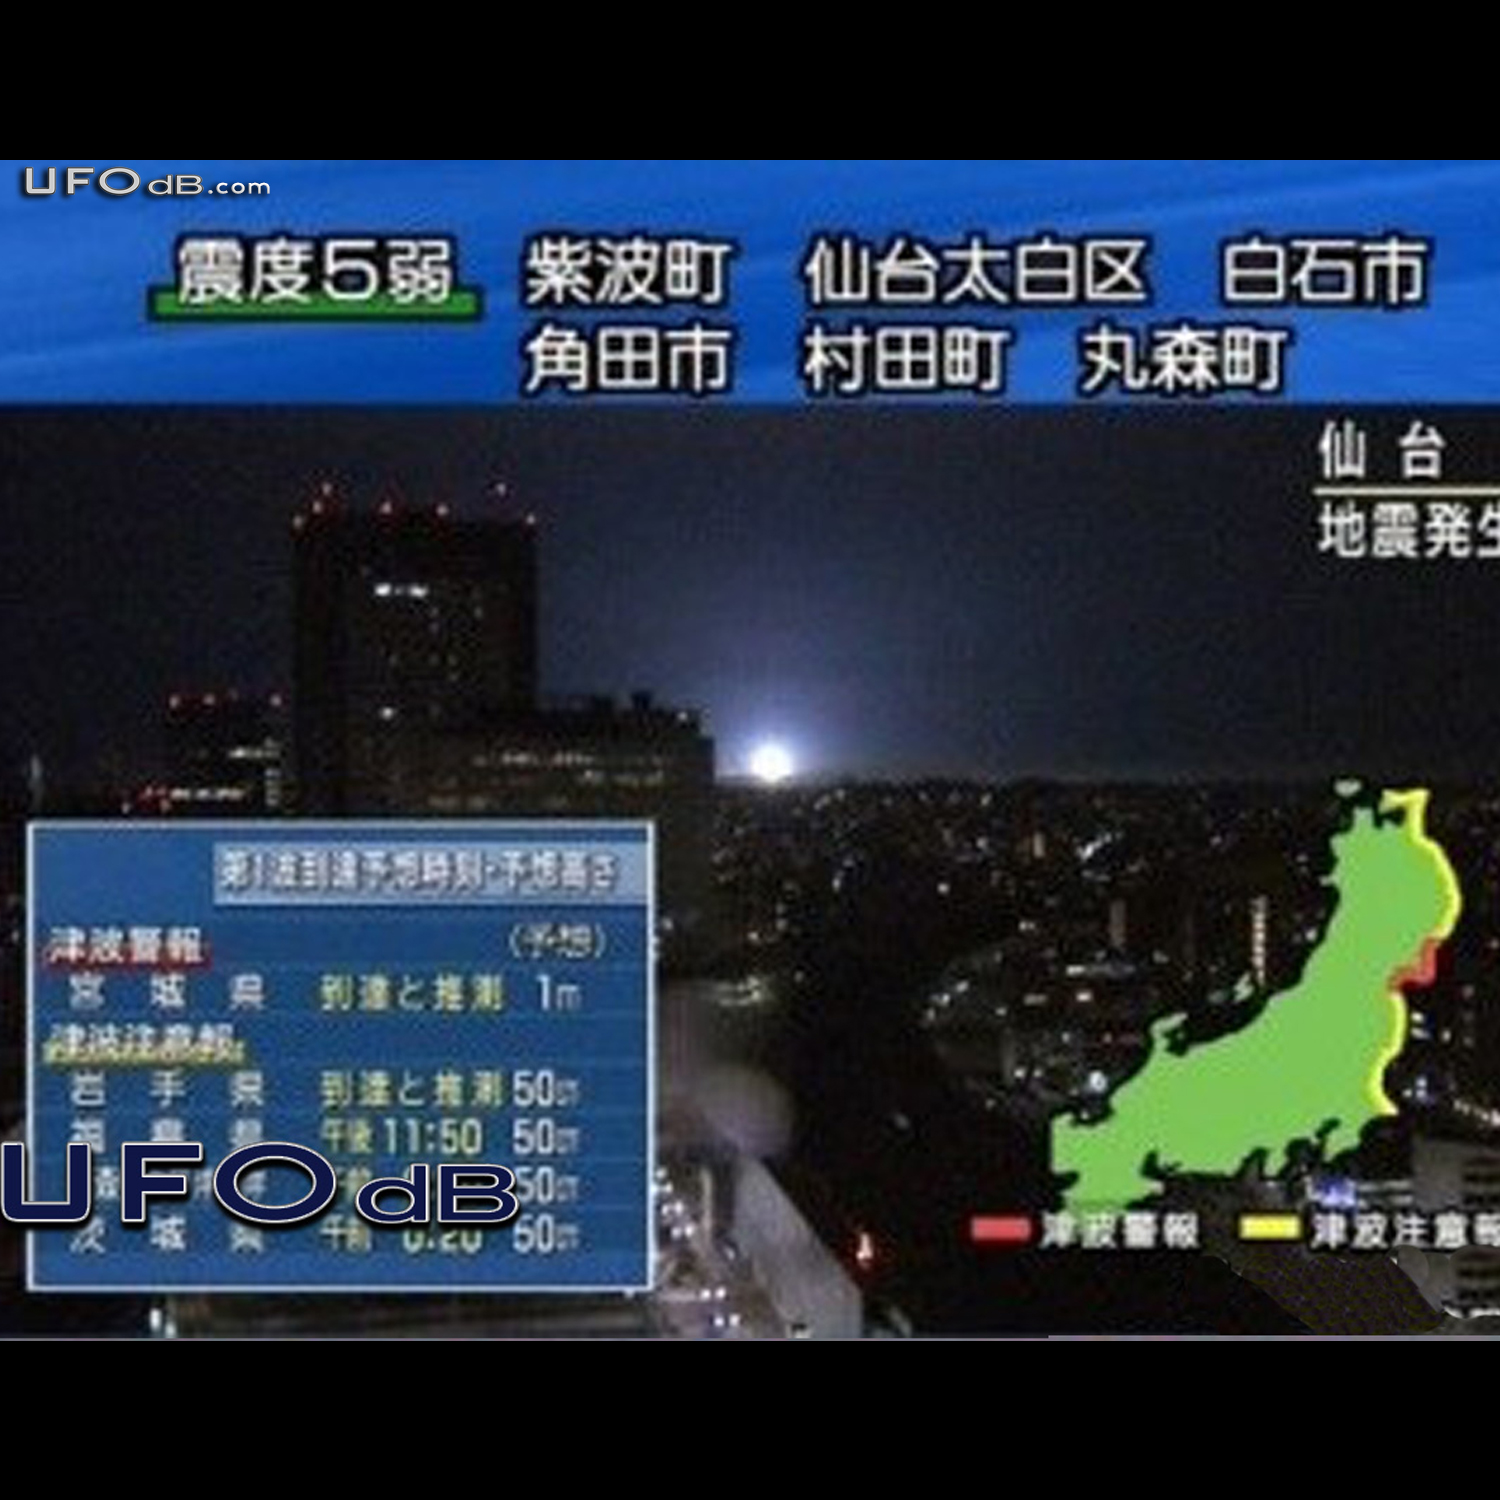 NHK TV News show earthquake strange UFO light | Japan | April 7 2011 UFO Picture #293-2